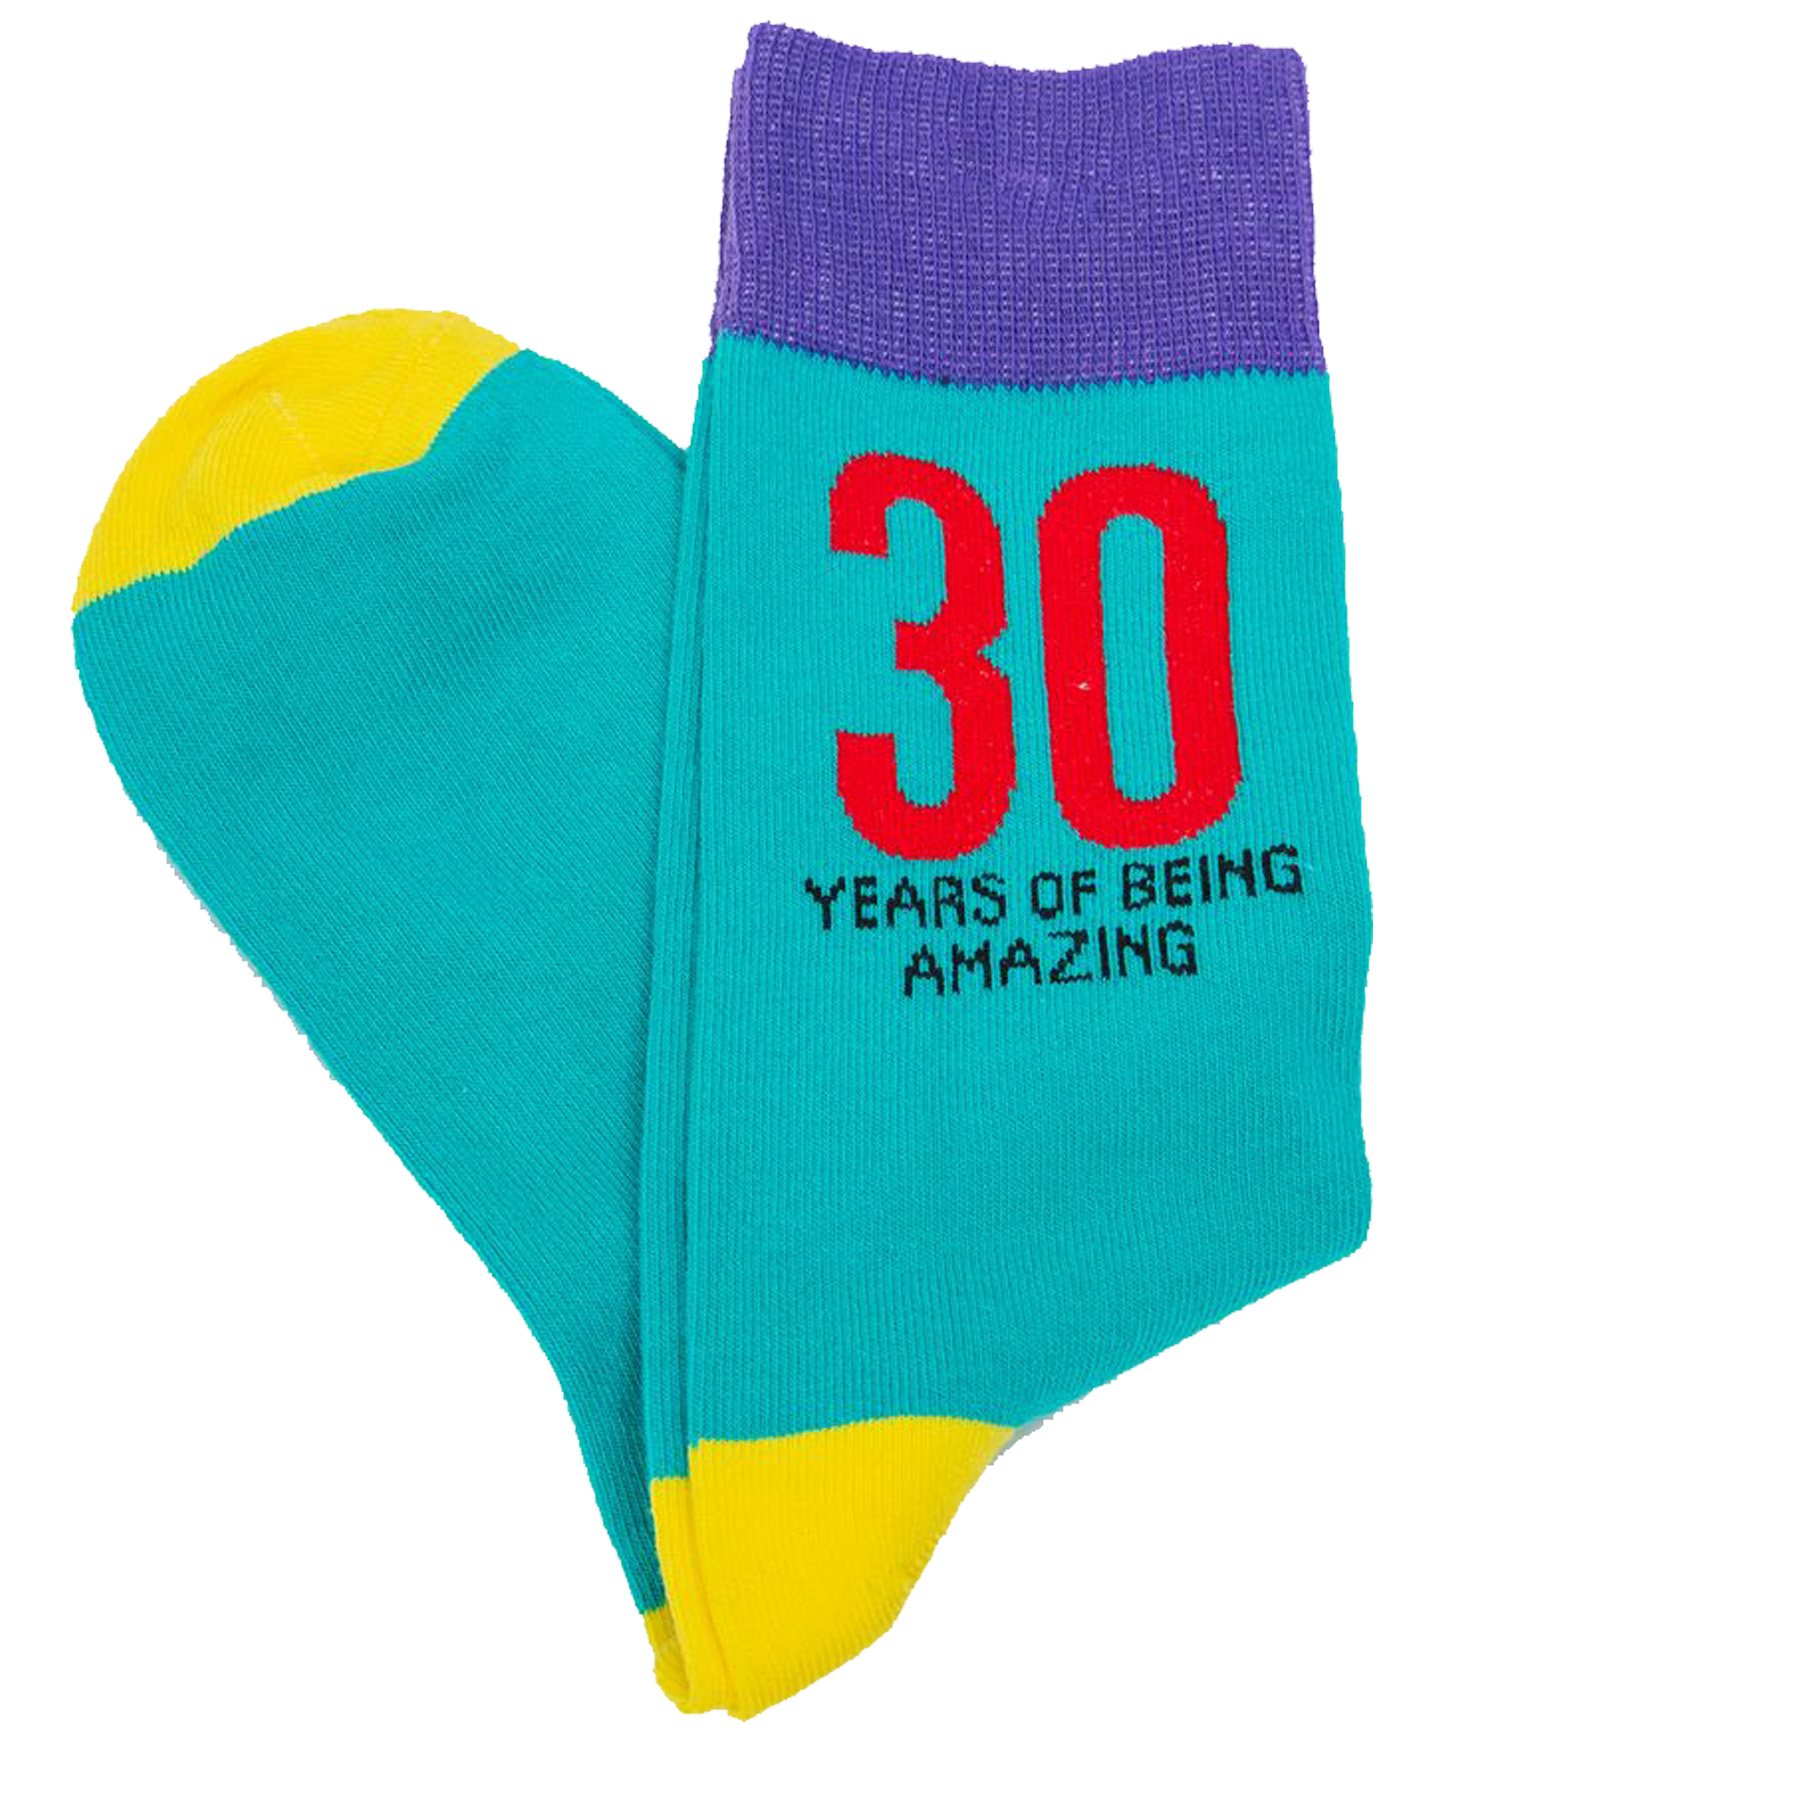 Men's Pair Colourful Socks Size 7-11 30th Birthday